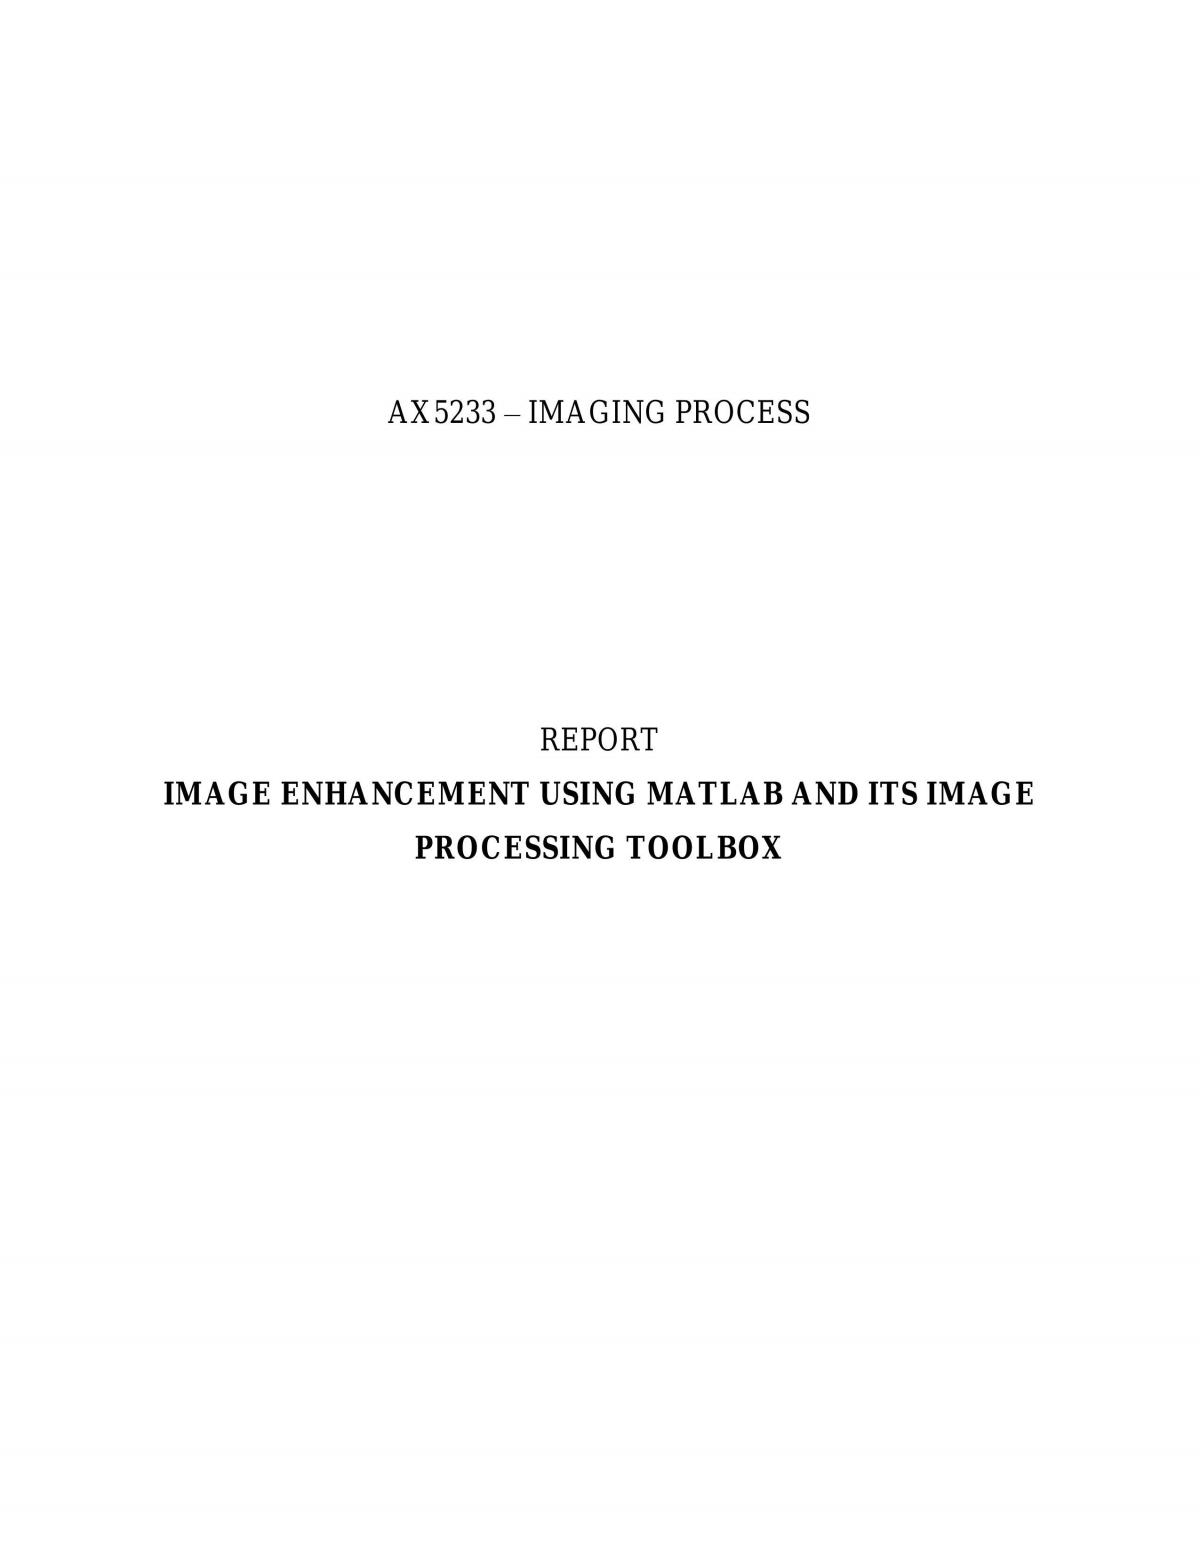 Image processing using MATLAB - Page 1